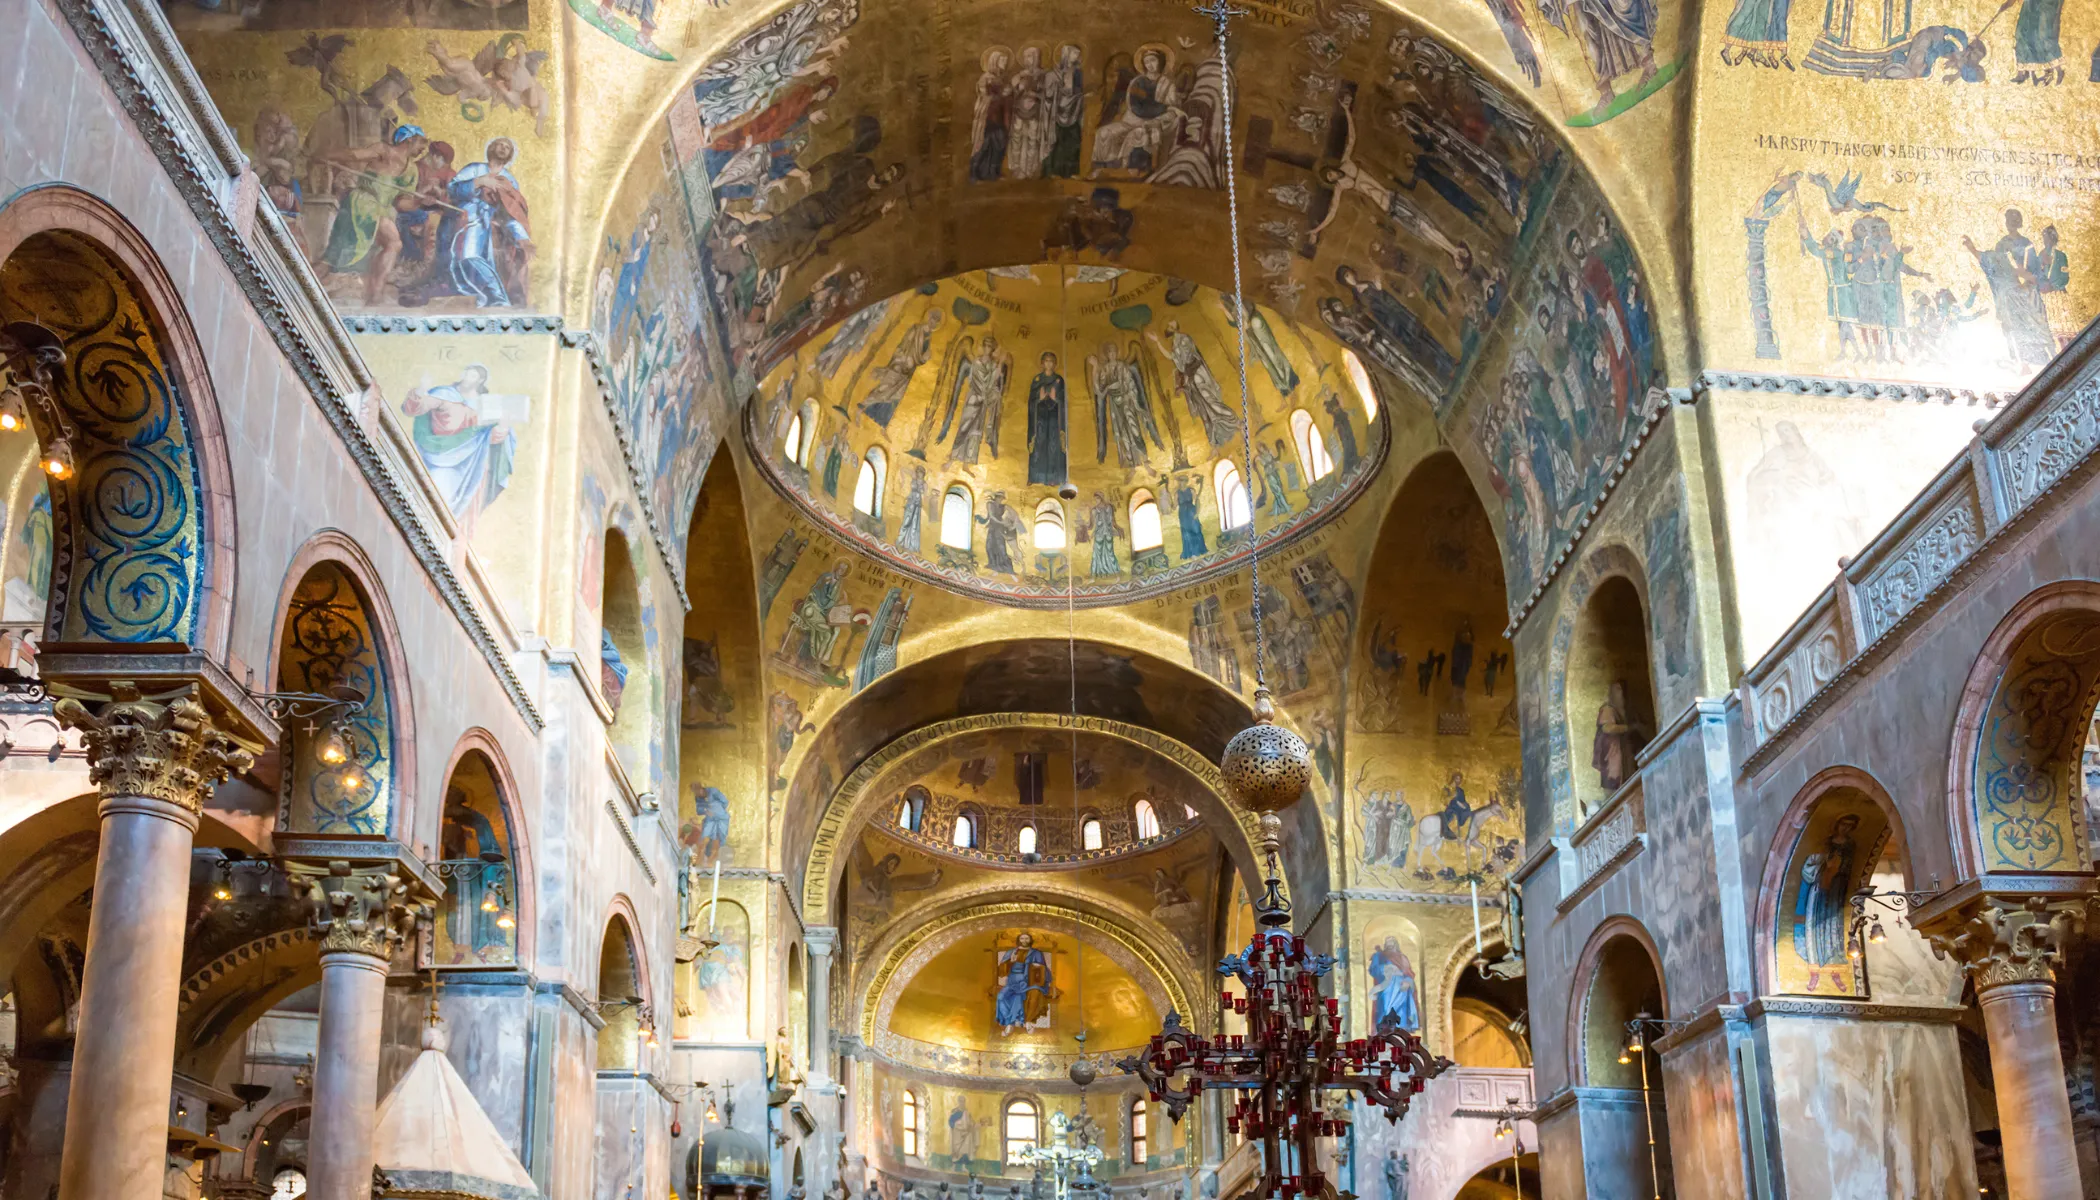 St. Mark's Basilica in Venice, Italy.?w=200&h=150